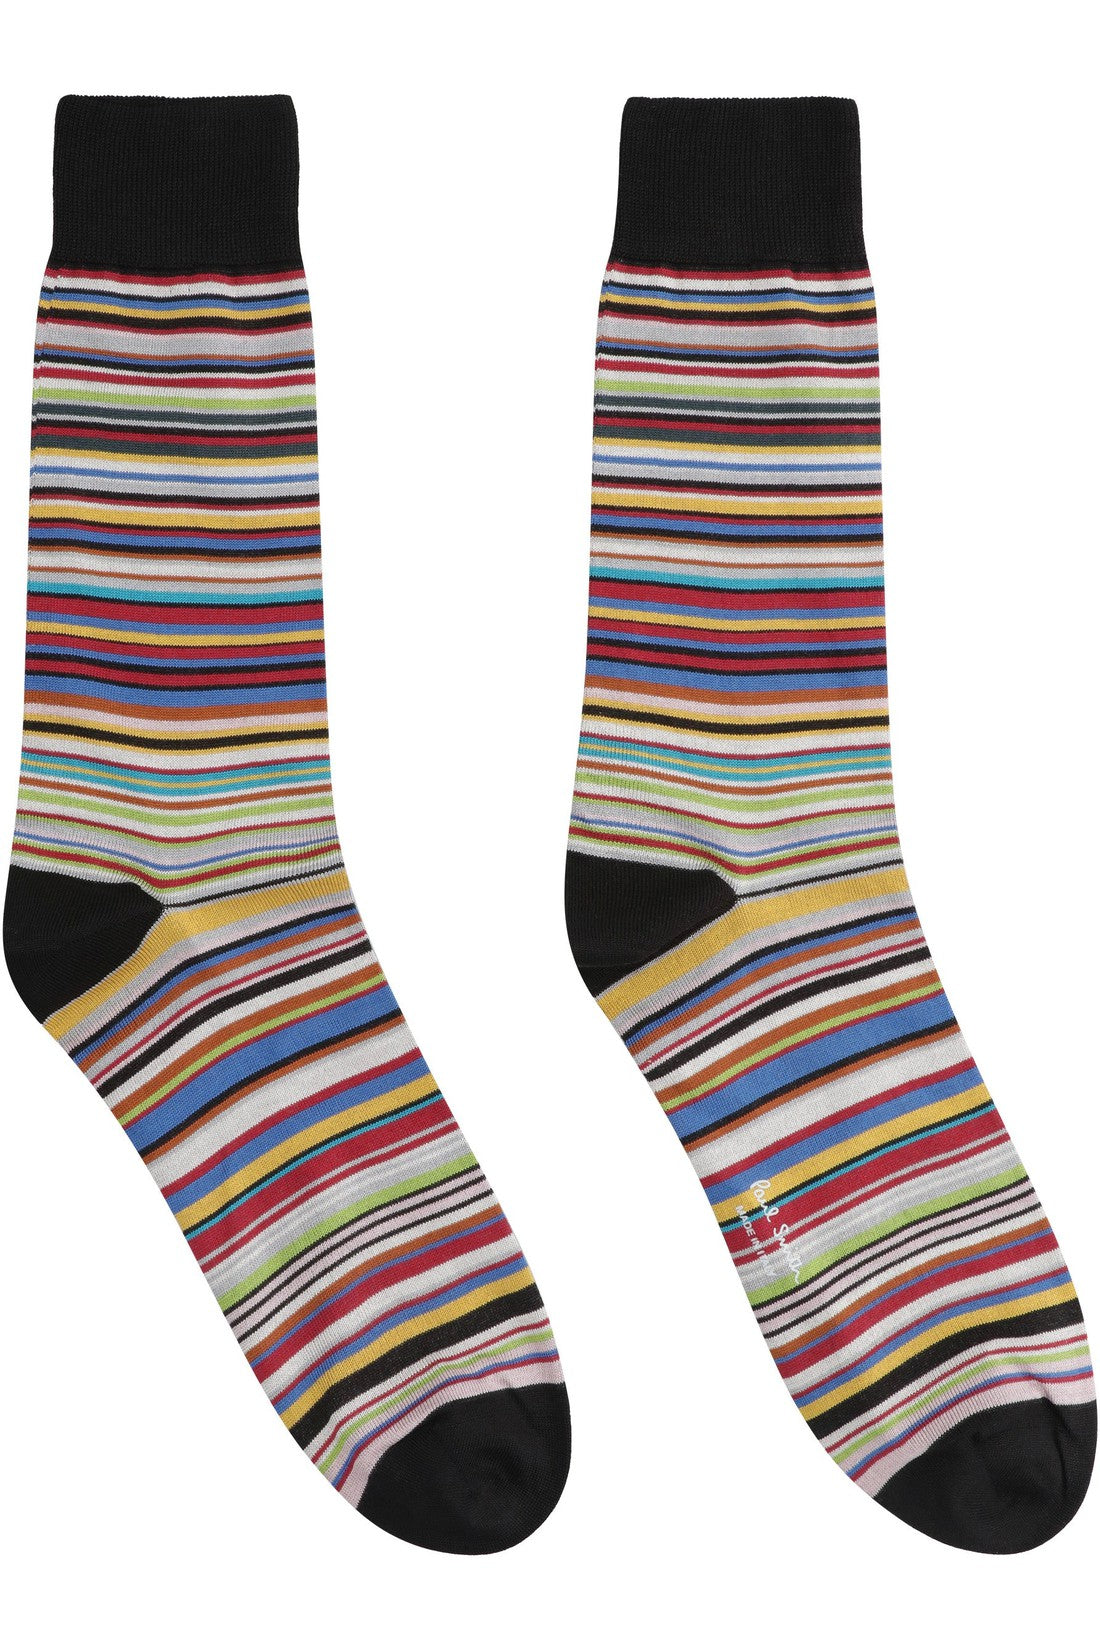 Paul Smith-OUTLET-SALE-Silk socks-ARCHIVIST